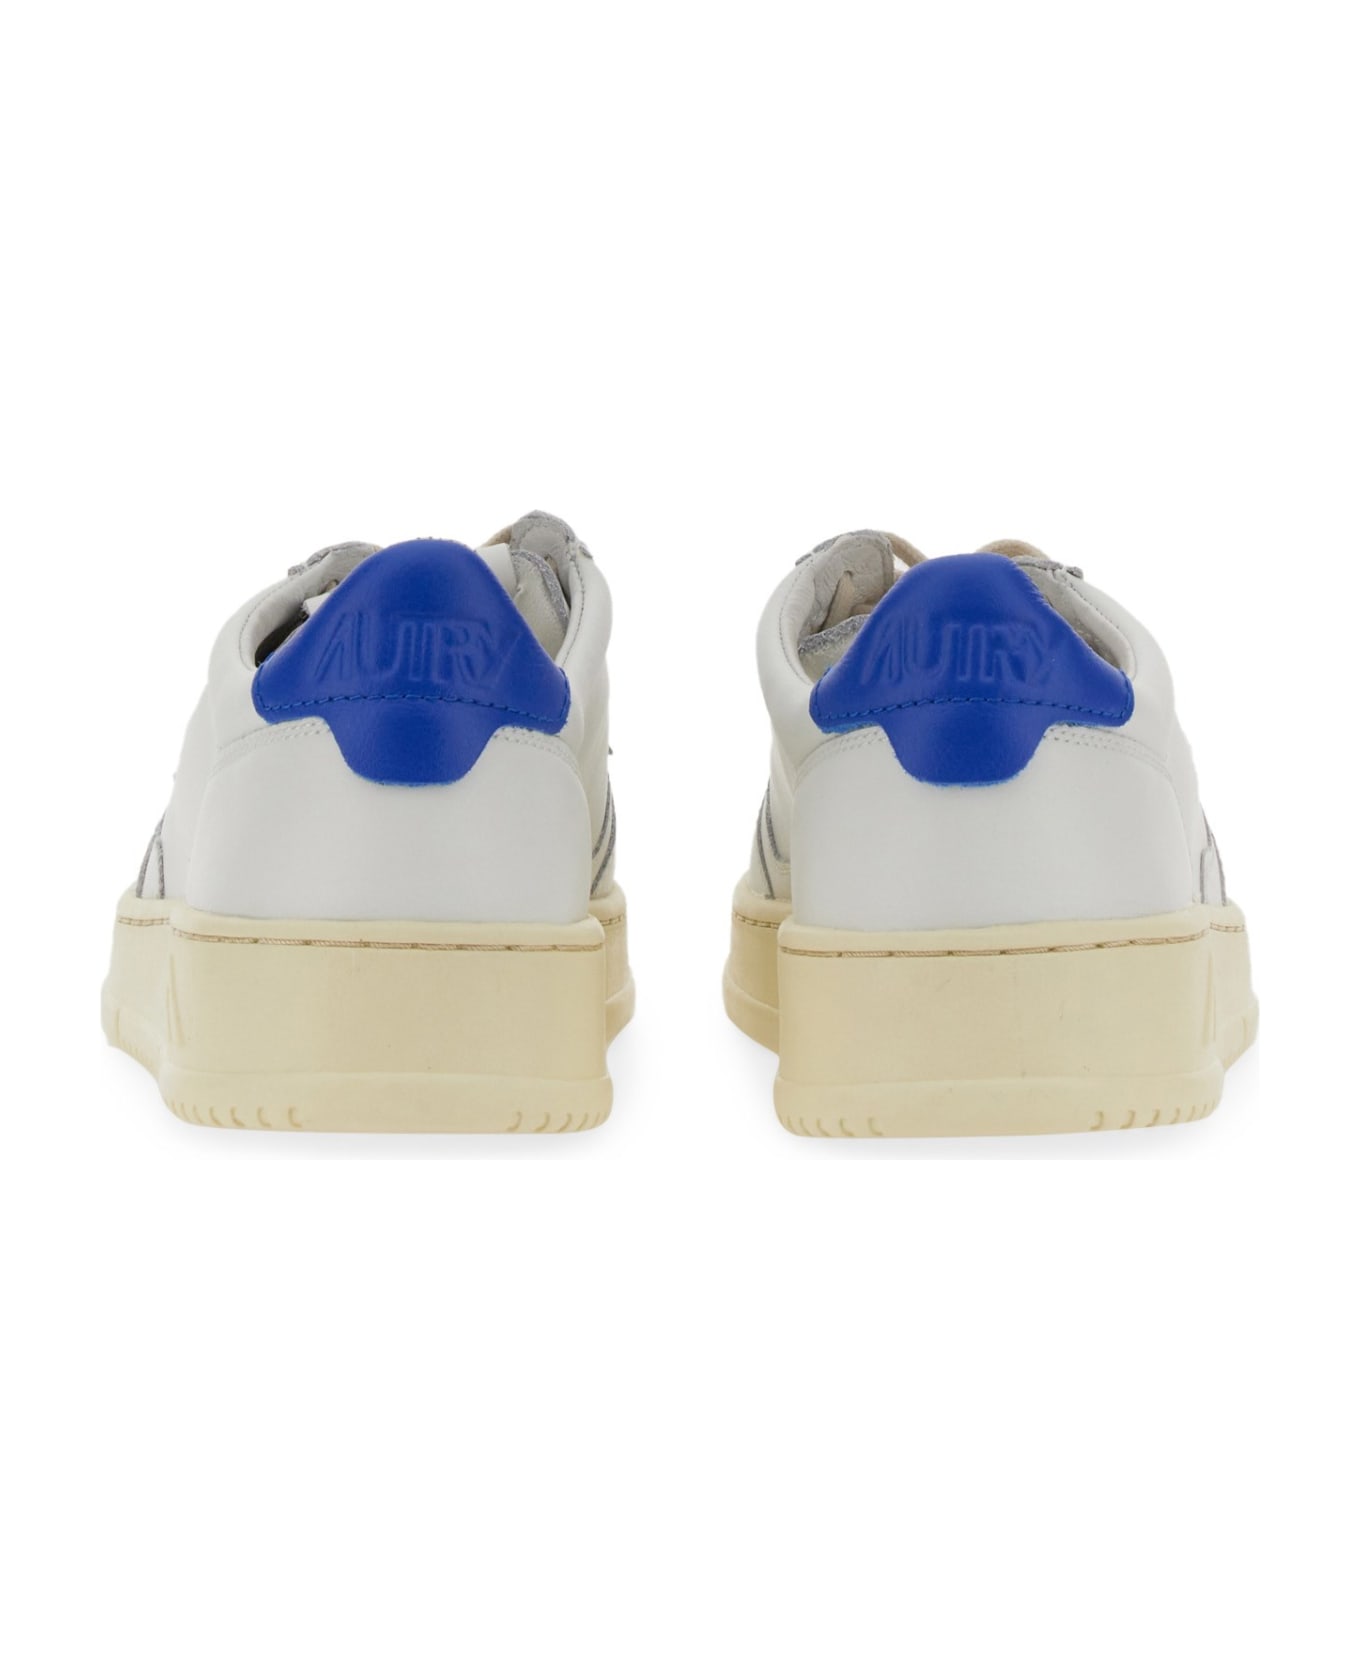 Autry Low Medialist Sneakers - White/light Blue